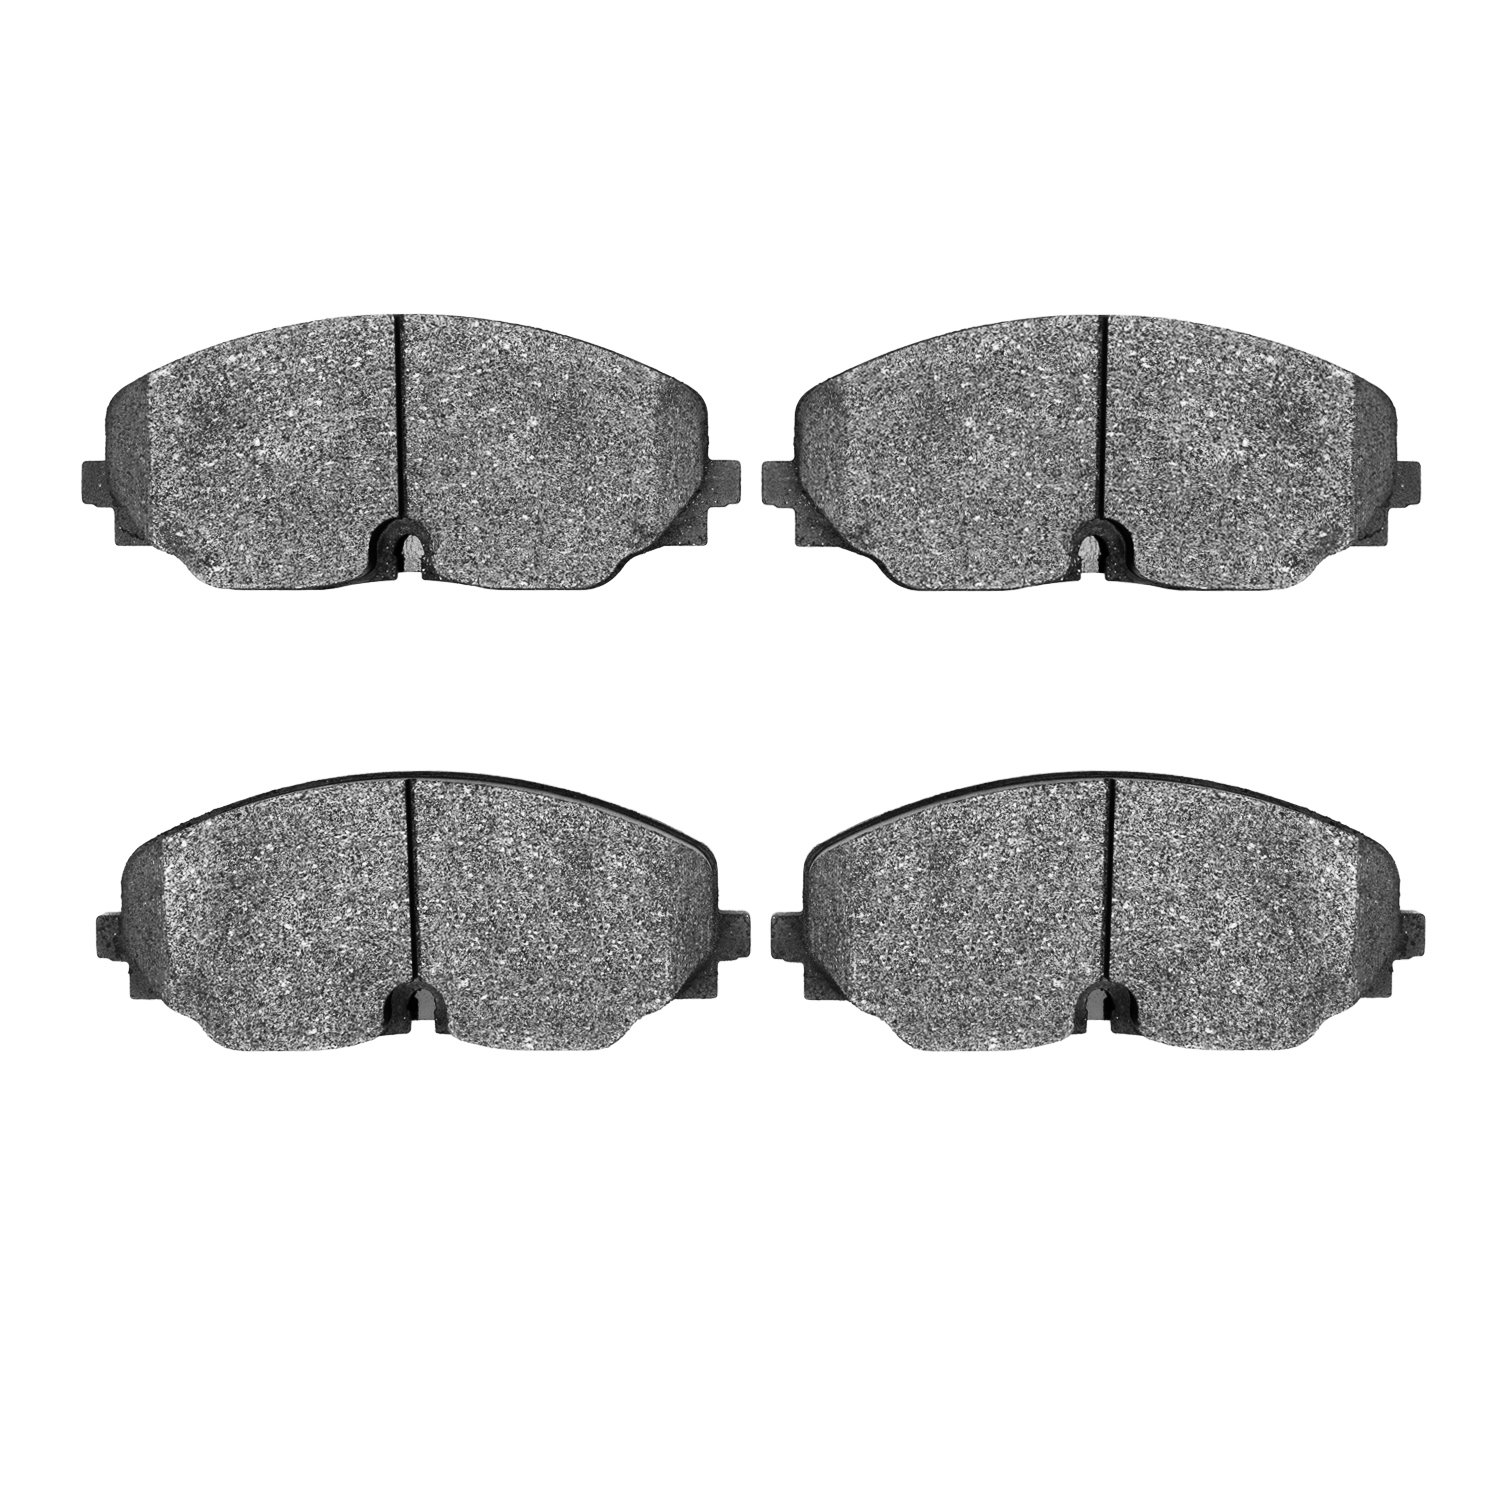 1310-2074-00 3000-Series Ceramic Brake Pads, Fits Select Audi/Volkswagen, Position: Front